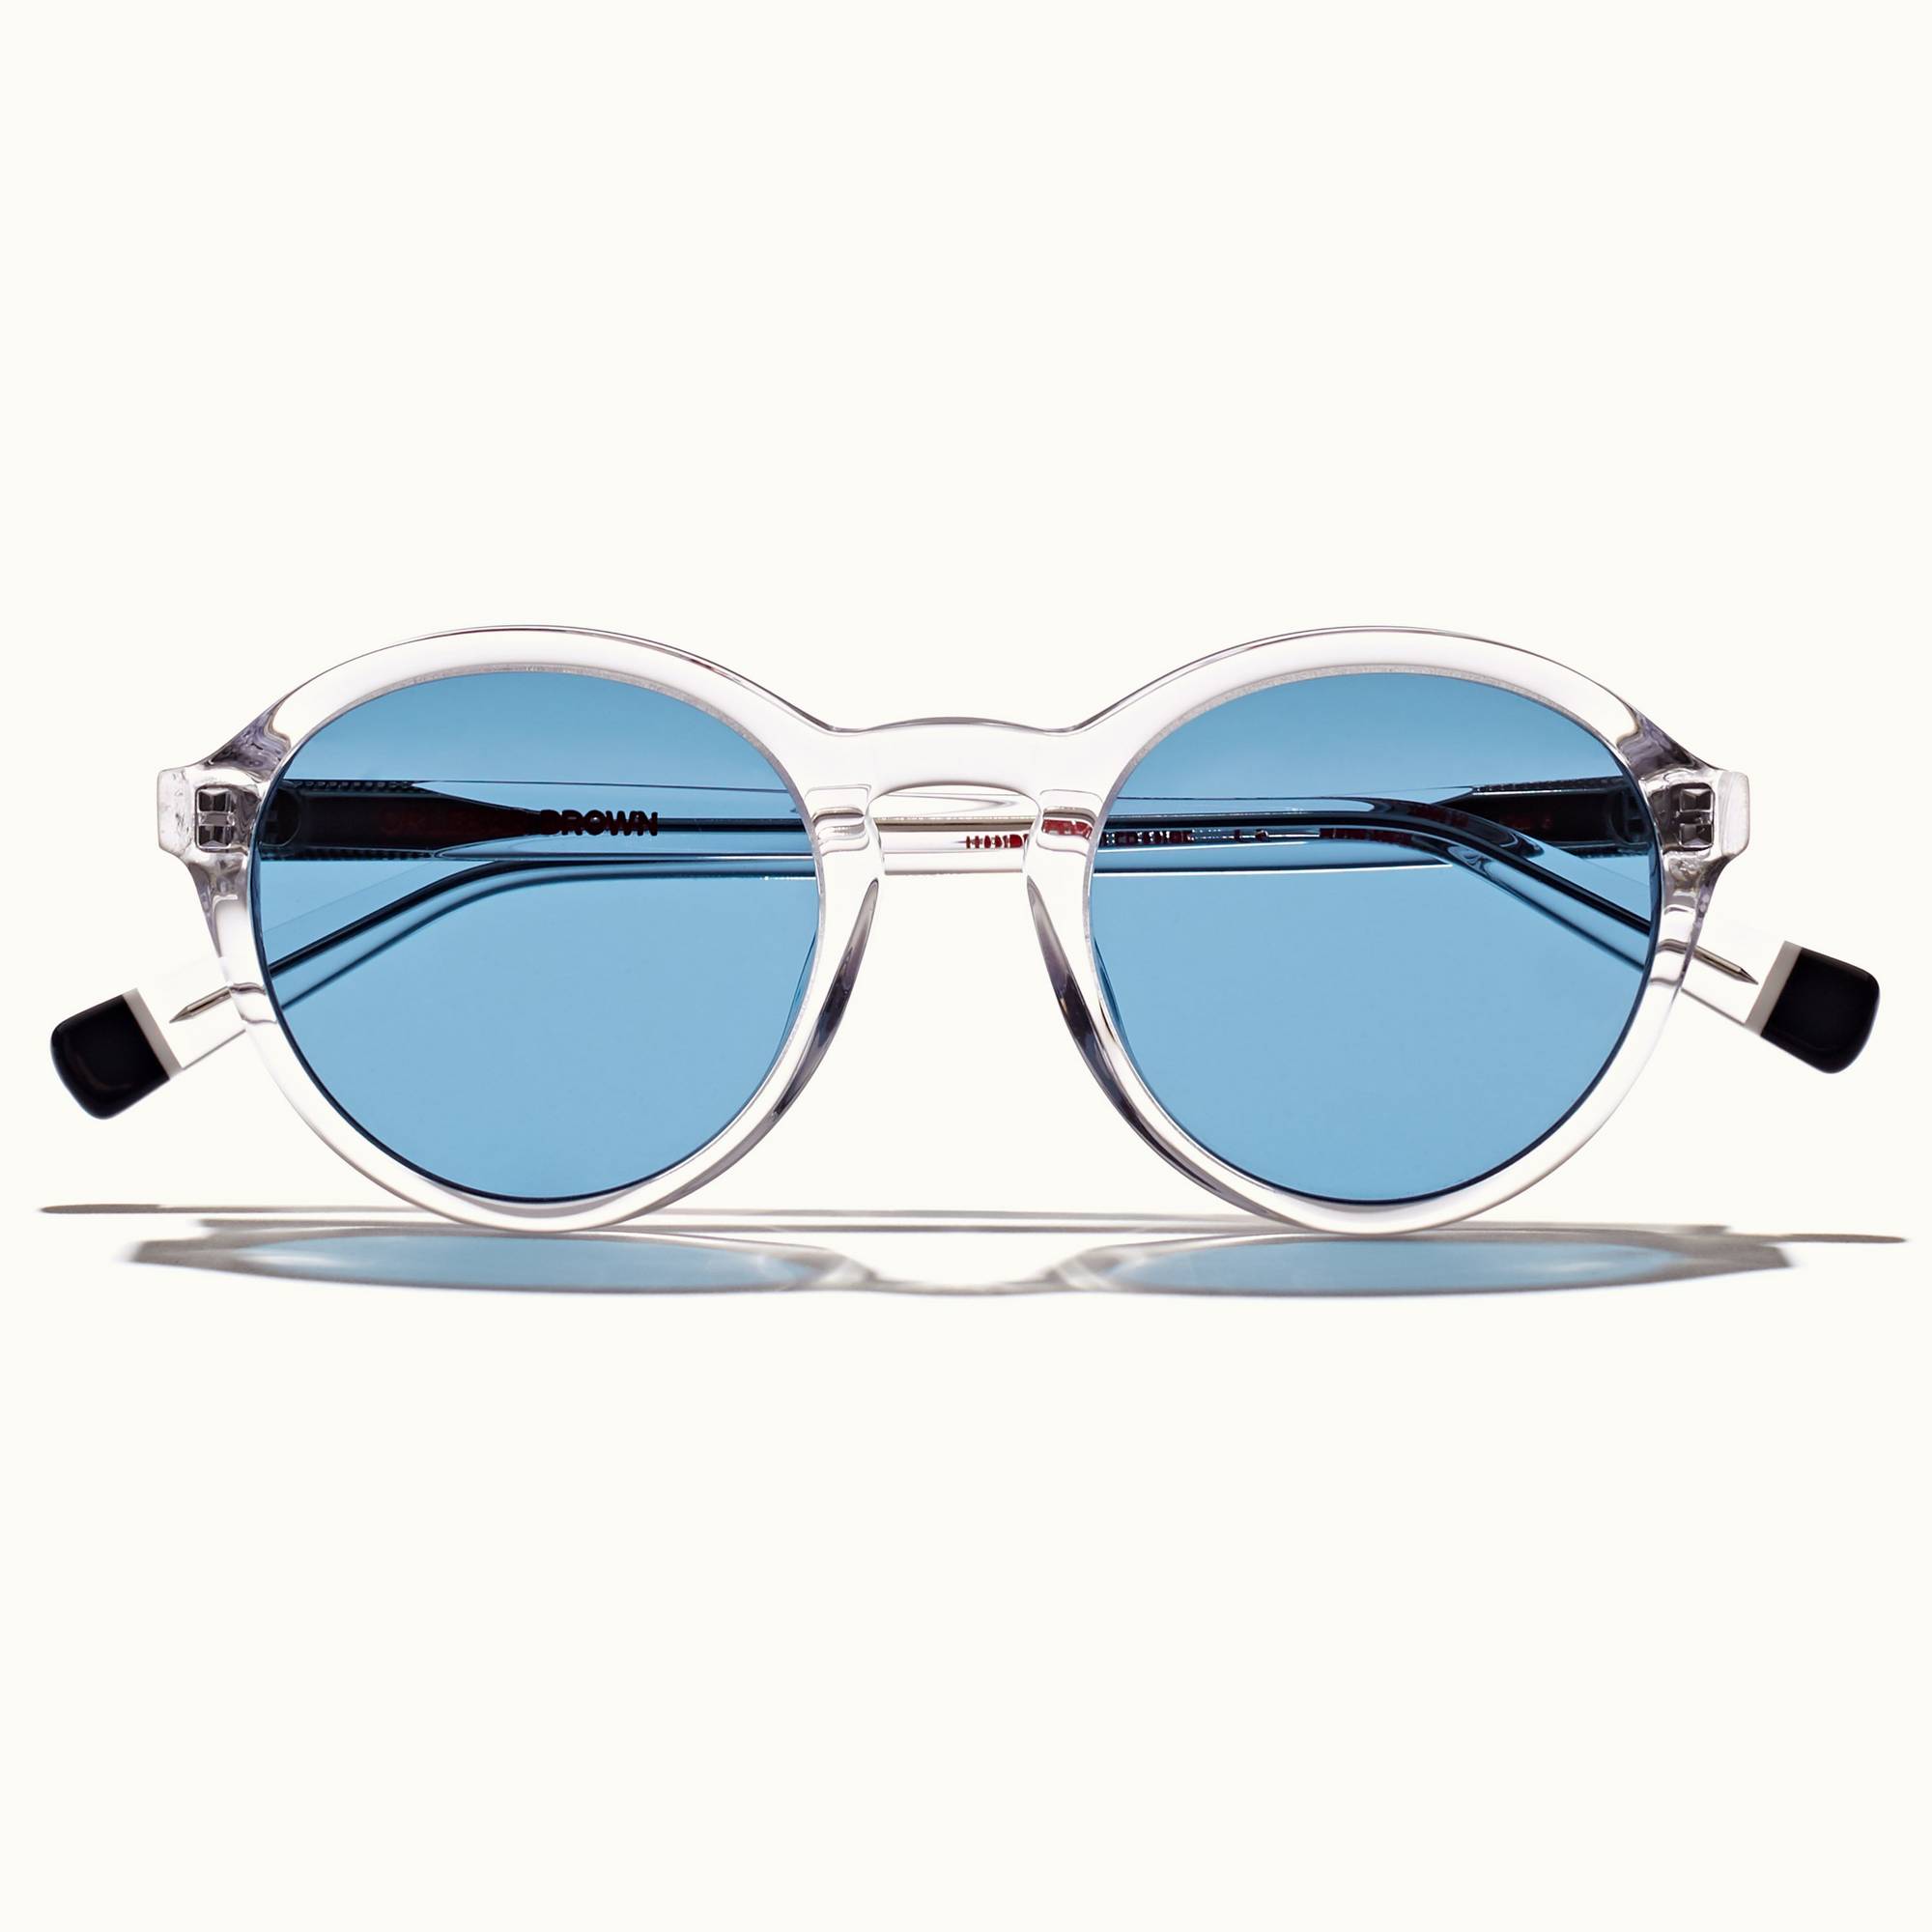 Harlyn - Mens Glacier Round Sunglasses